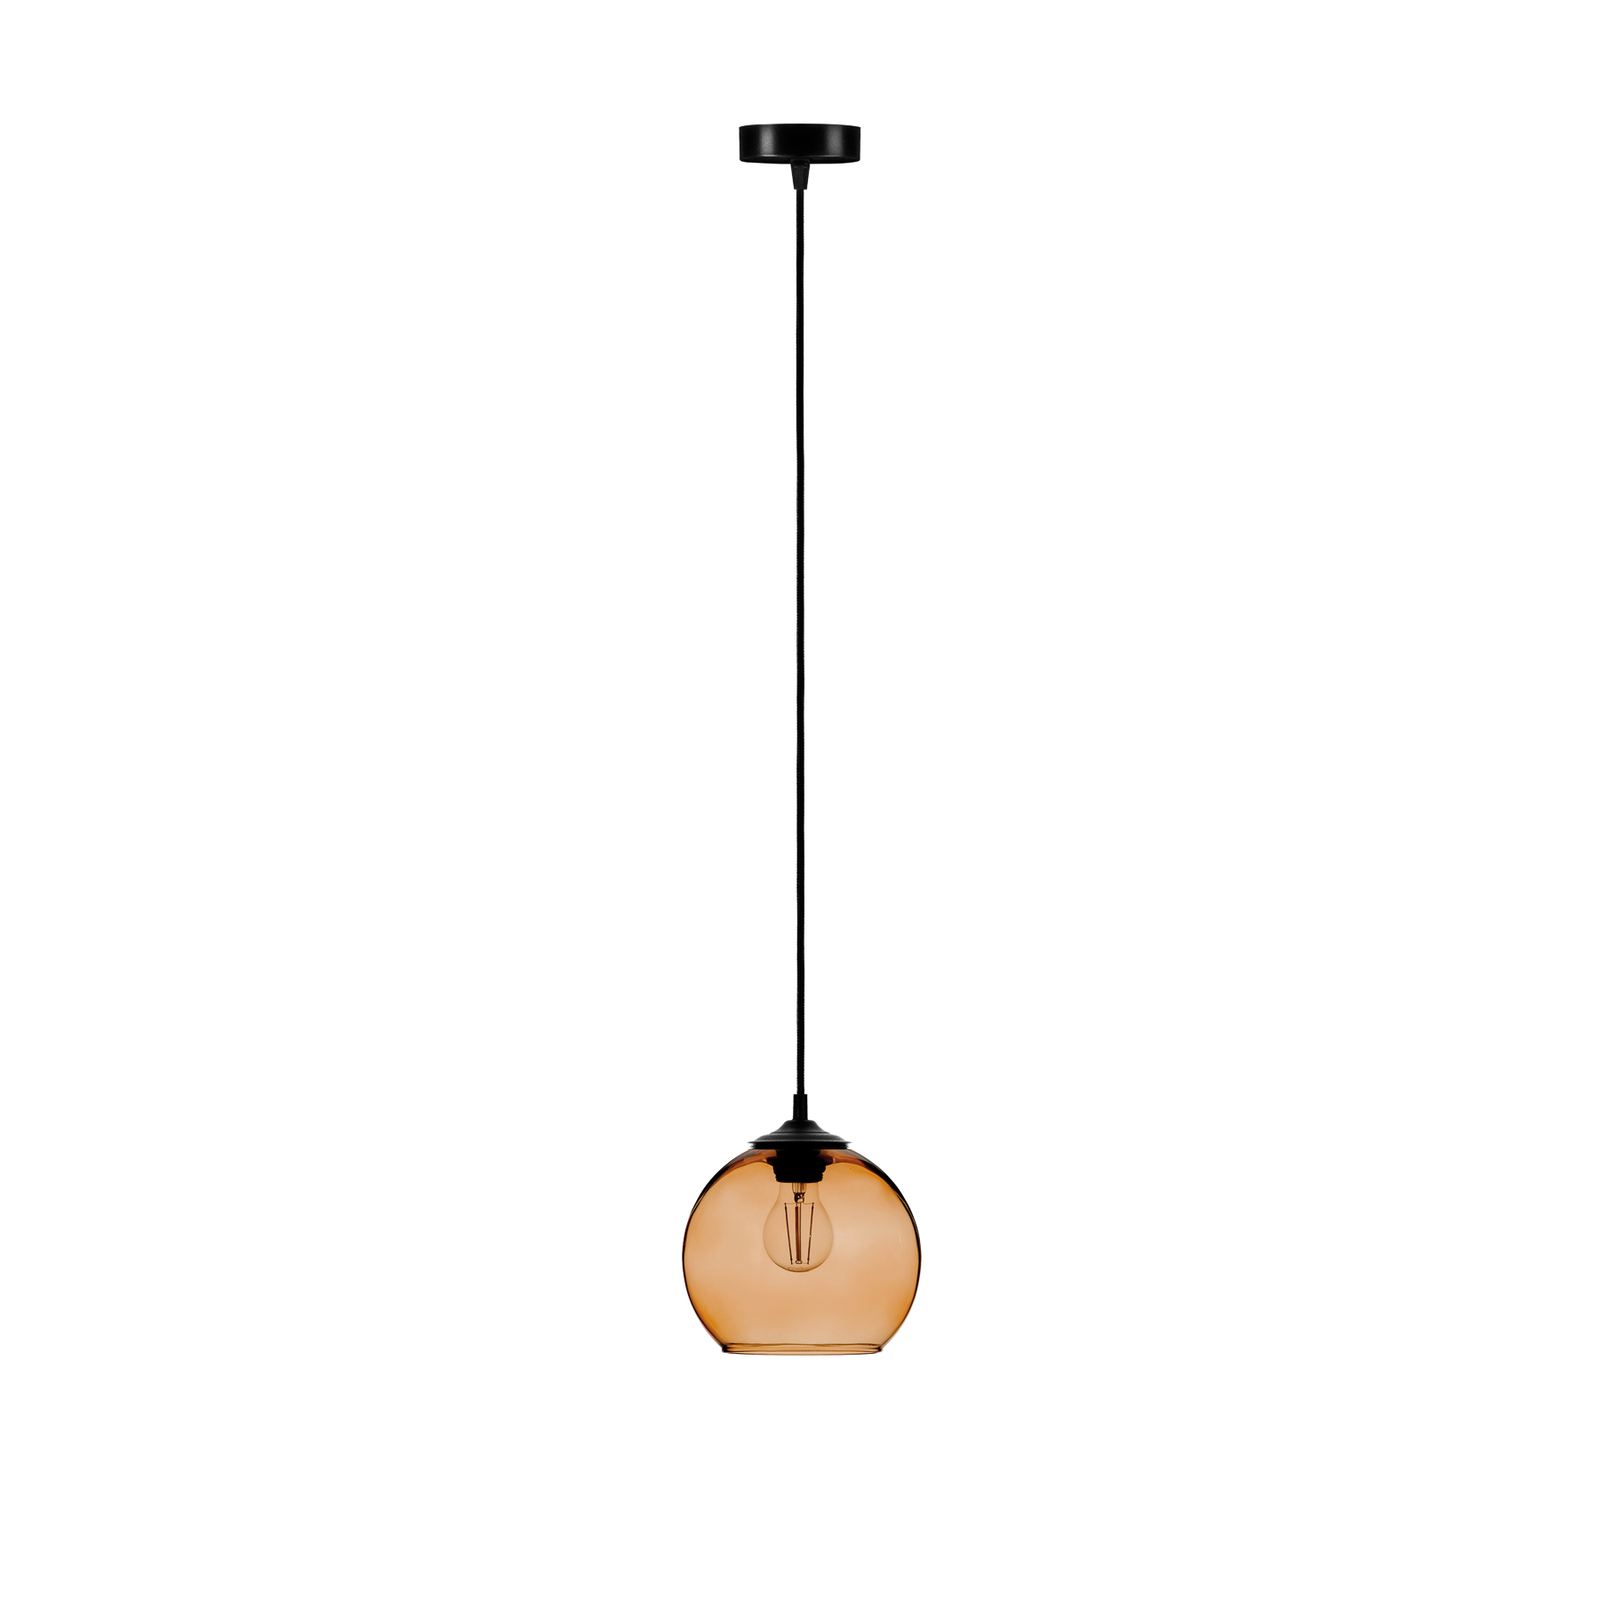 Hanging light ball glass ball shade amber Ø 20cm